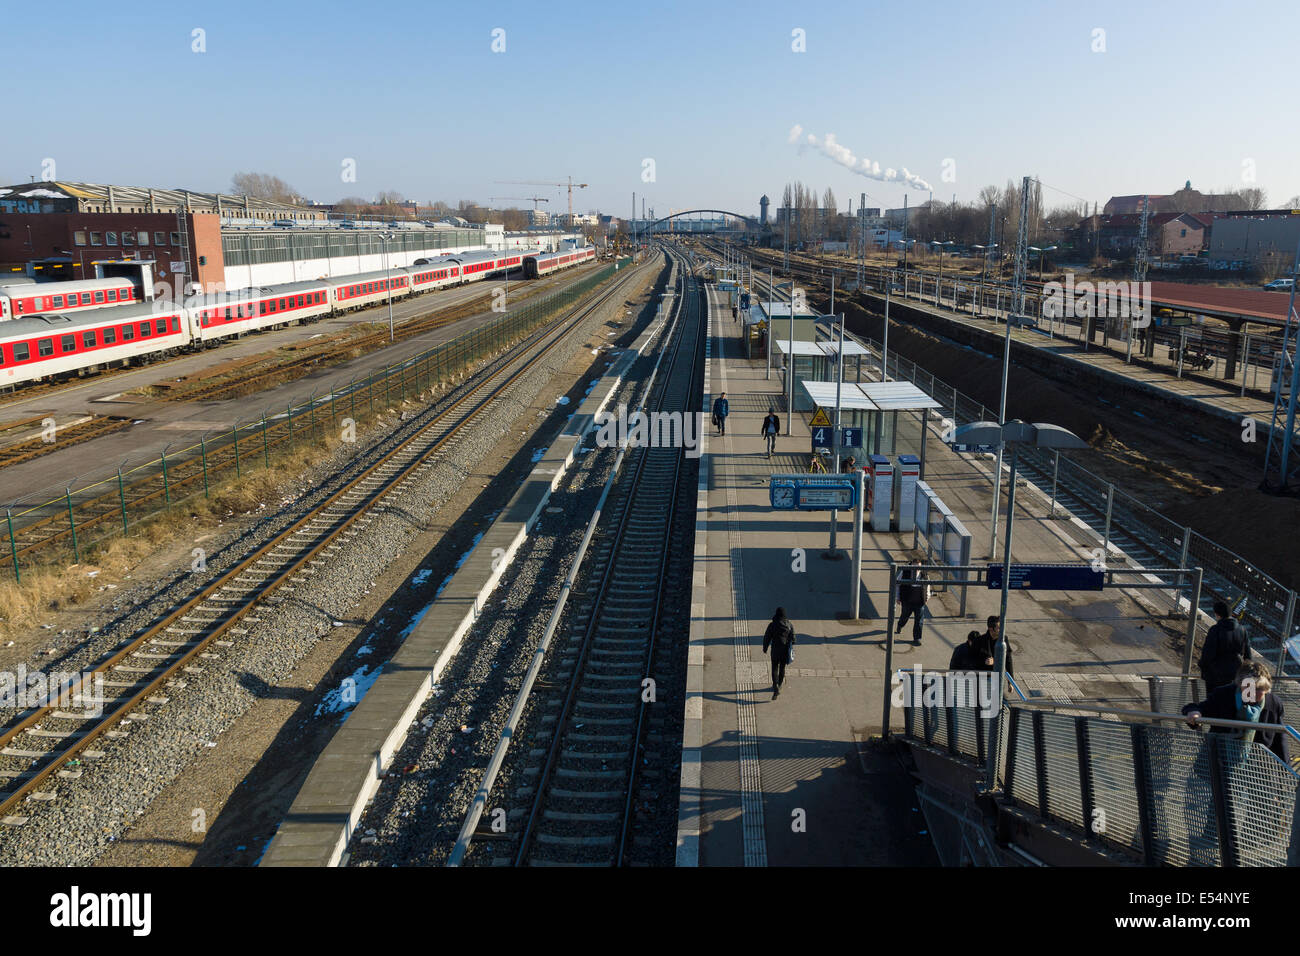 Construction of a new station Warschauer Strasse - transportation hub of public transport lines S-Bahn and U-Bahn Stock Photo